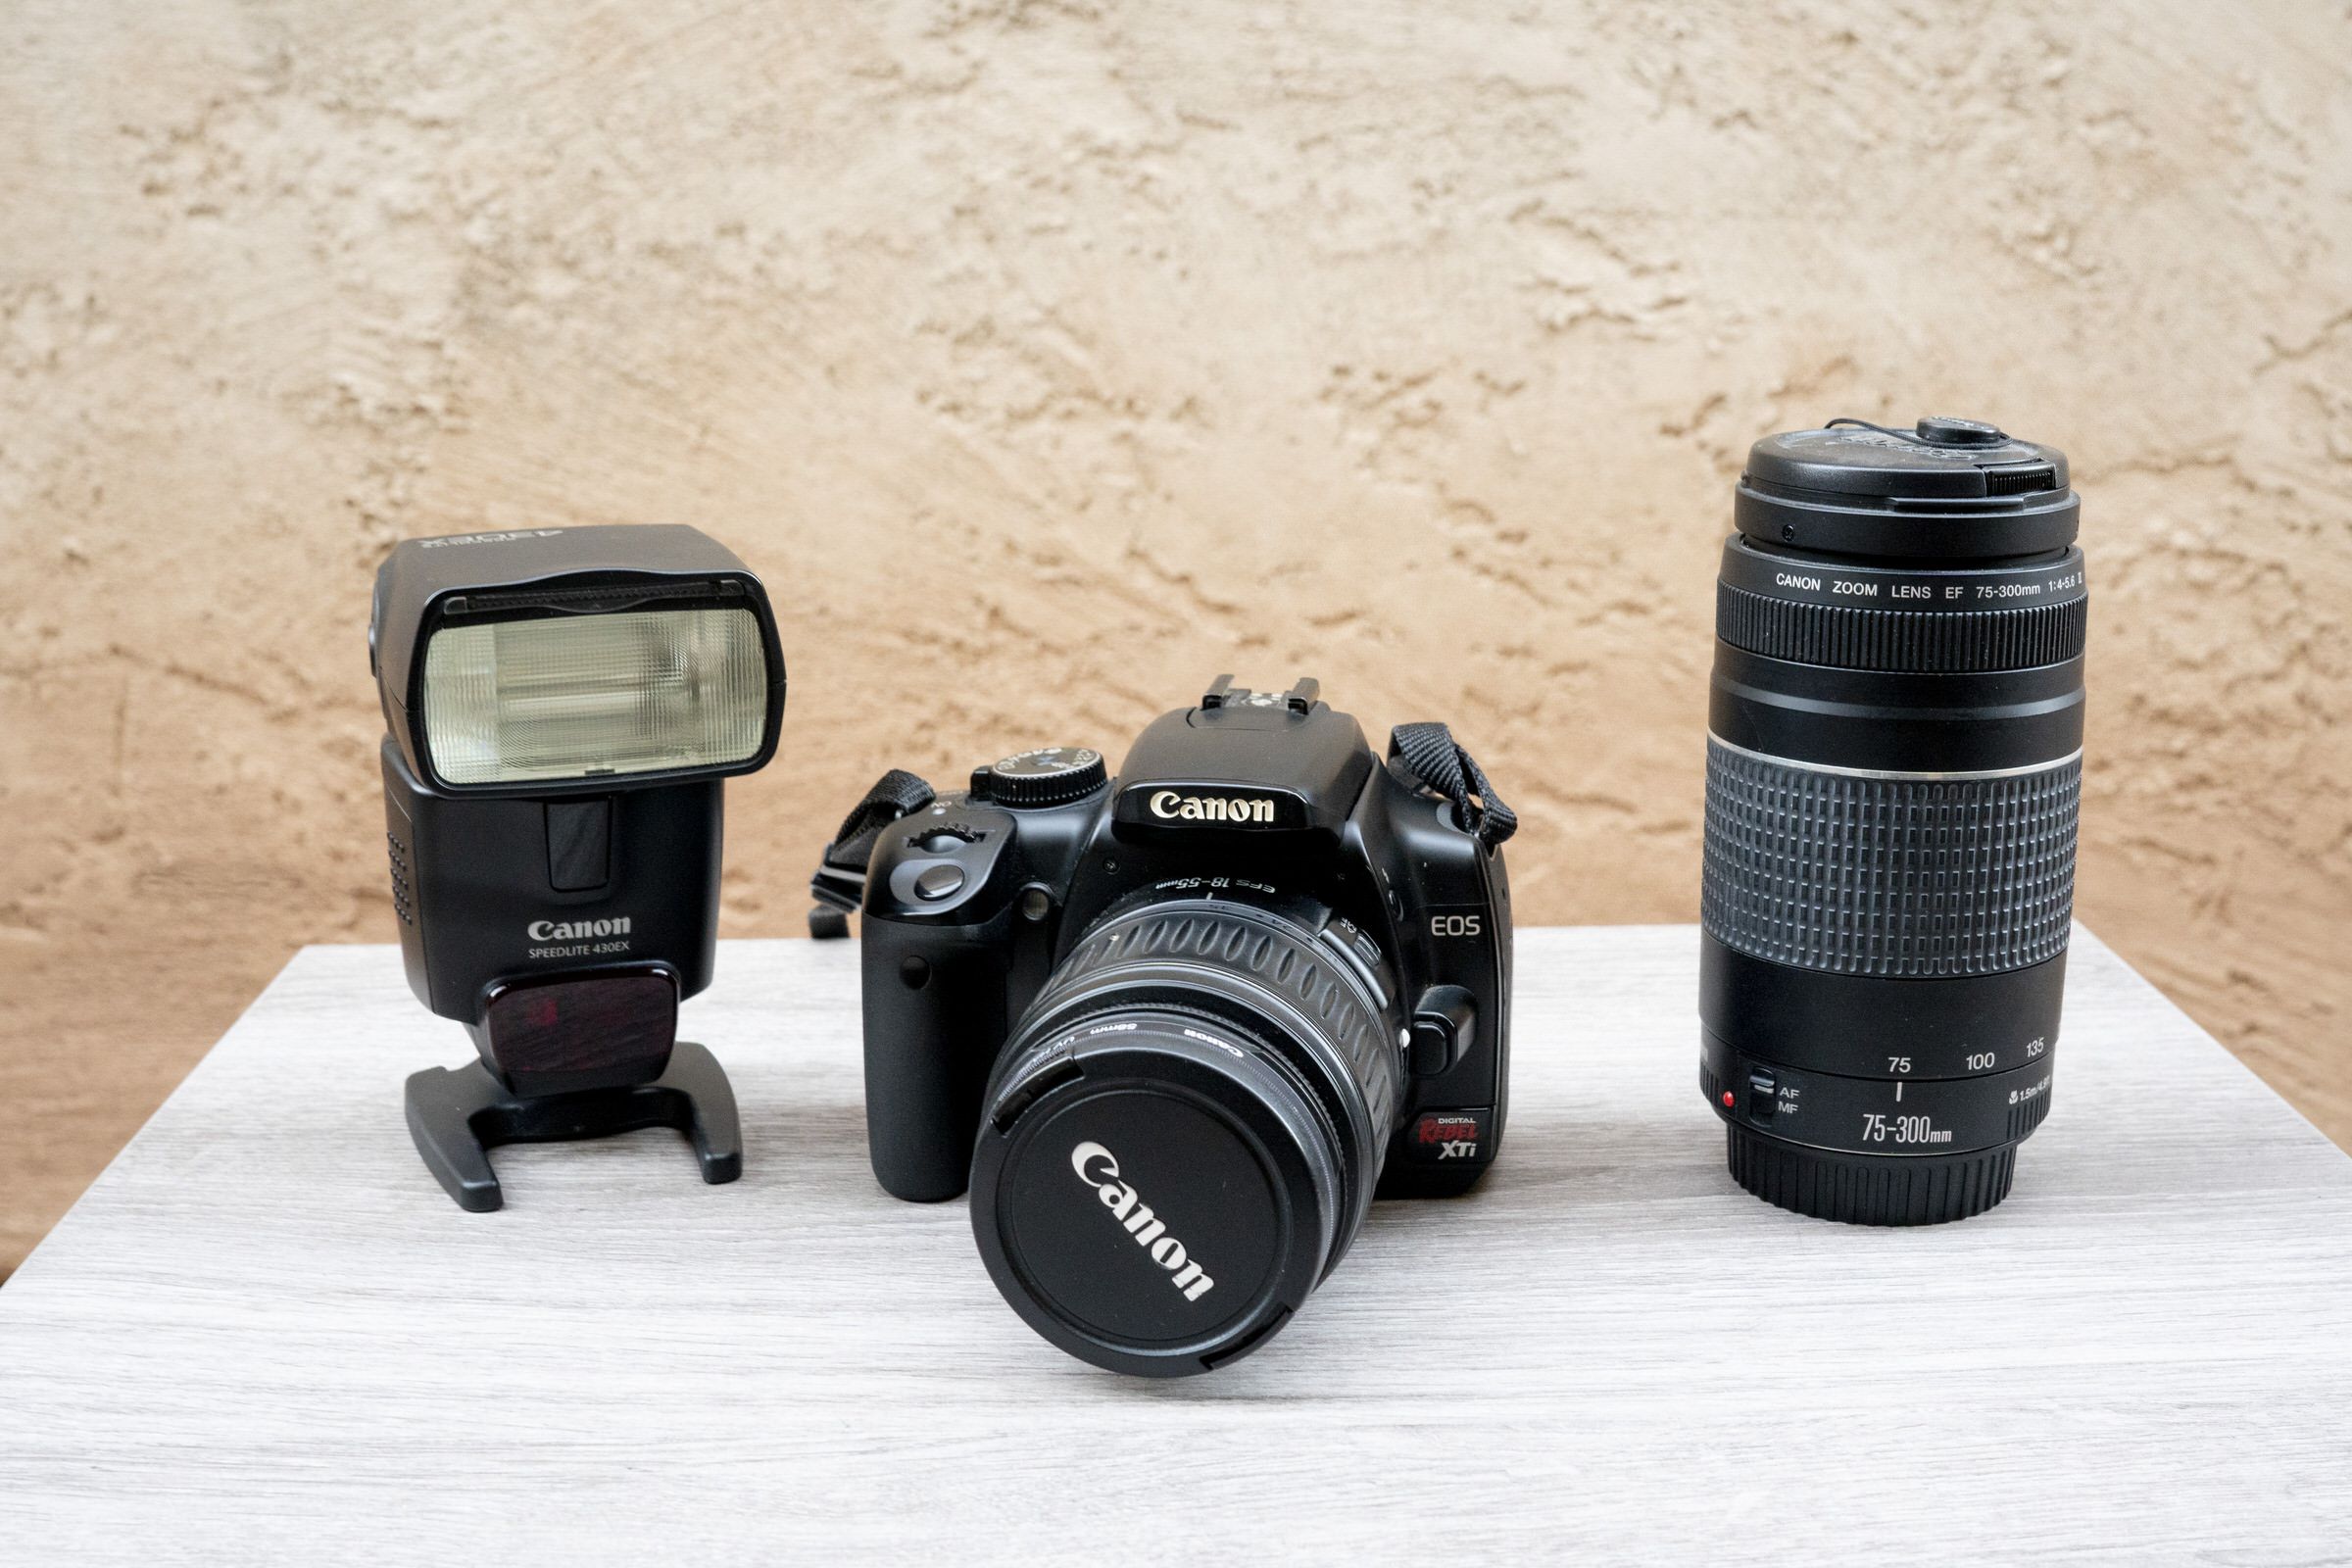 Canon XTi, 2 lenses, flash and camera bag